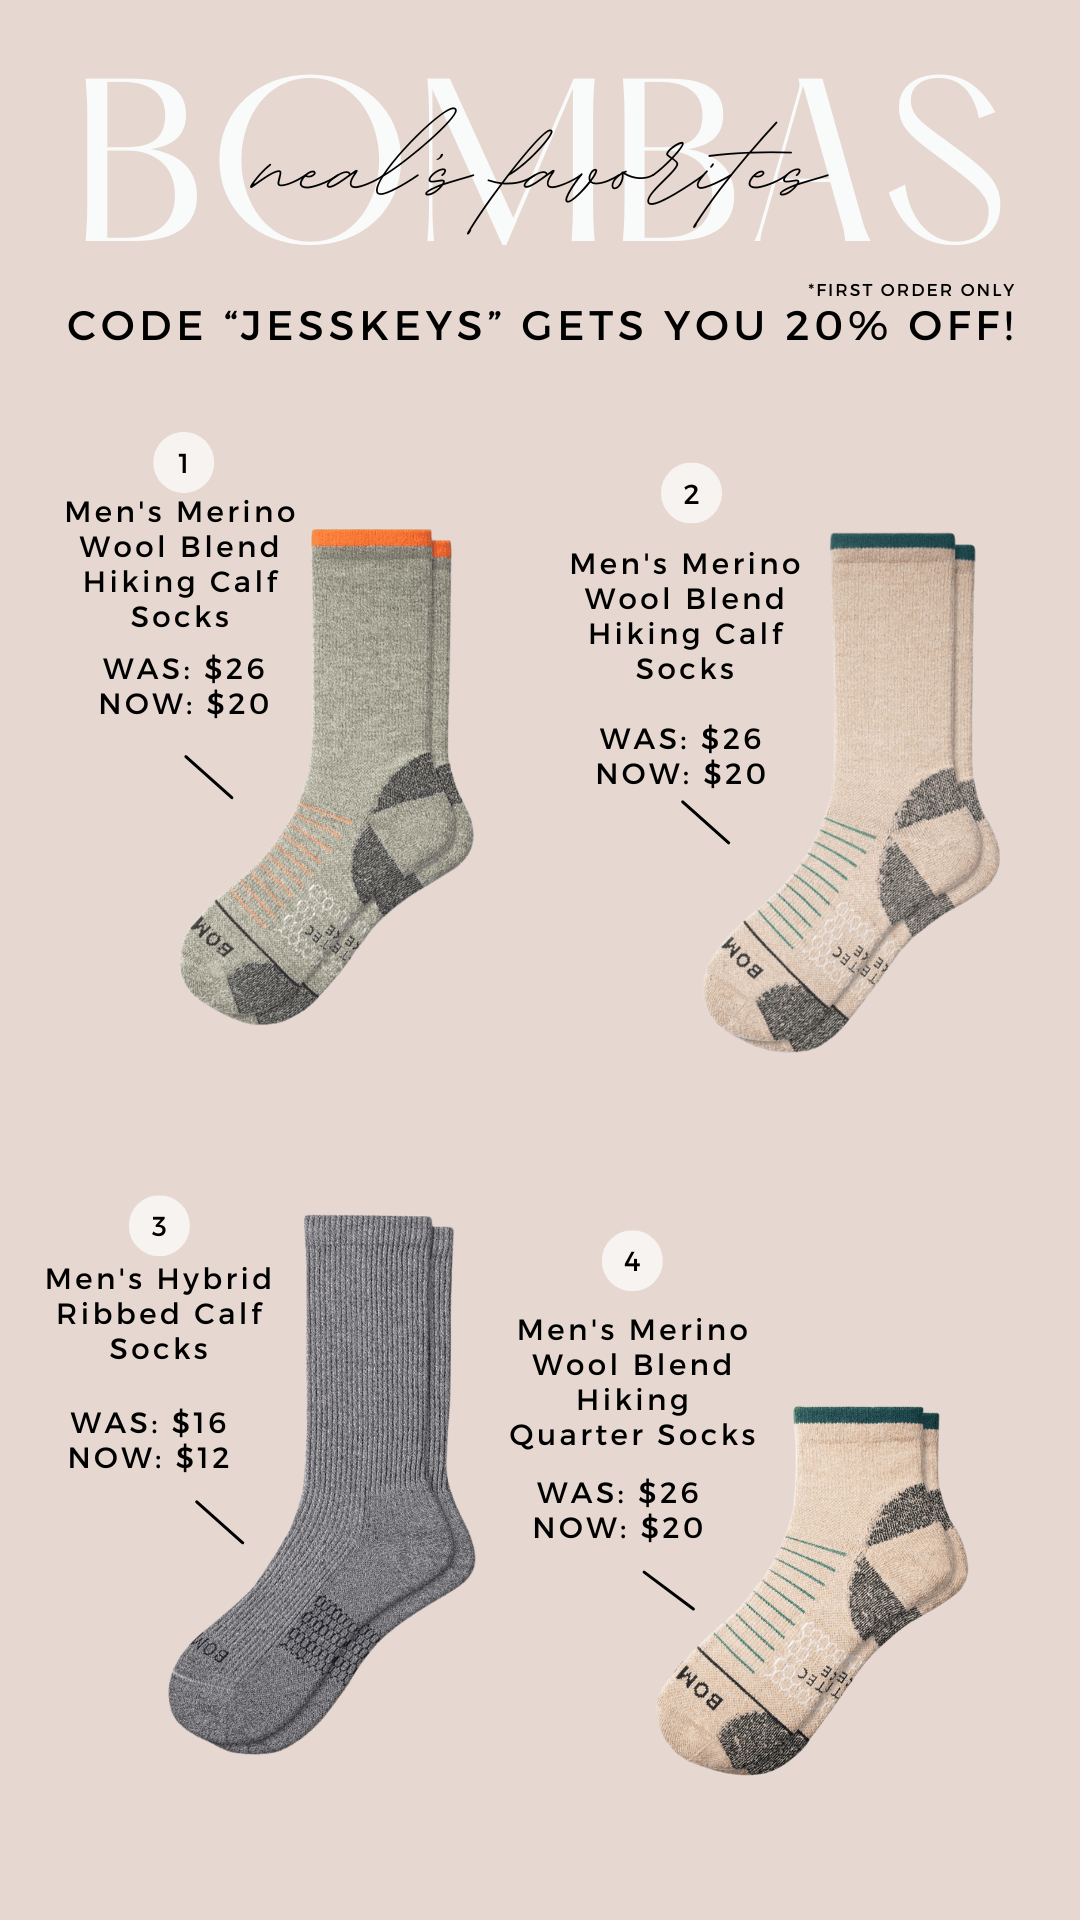 Bombas men's socks review